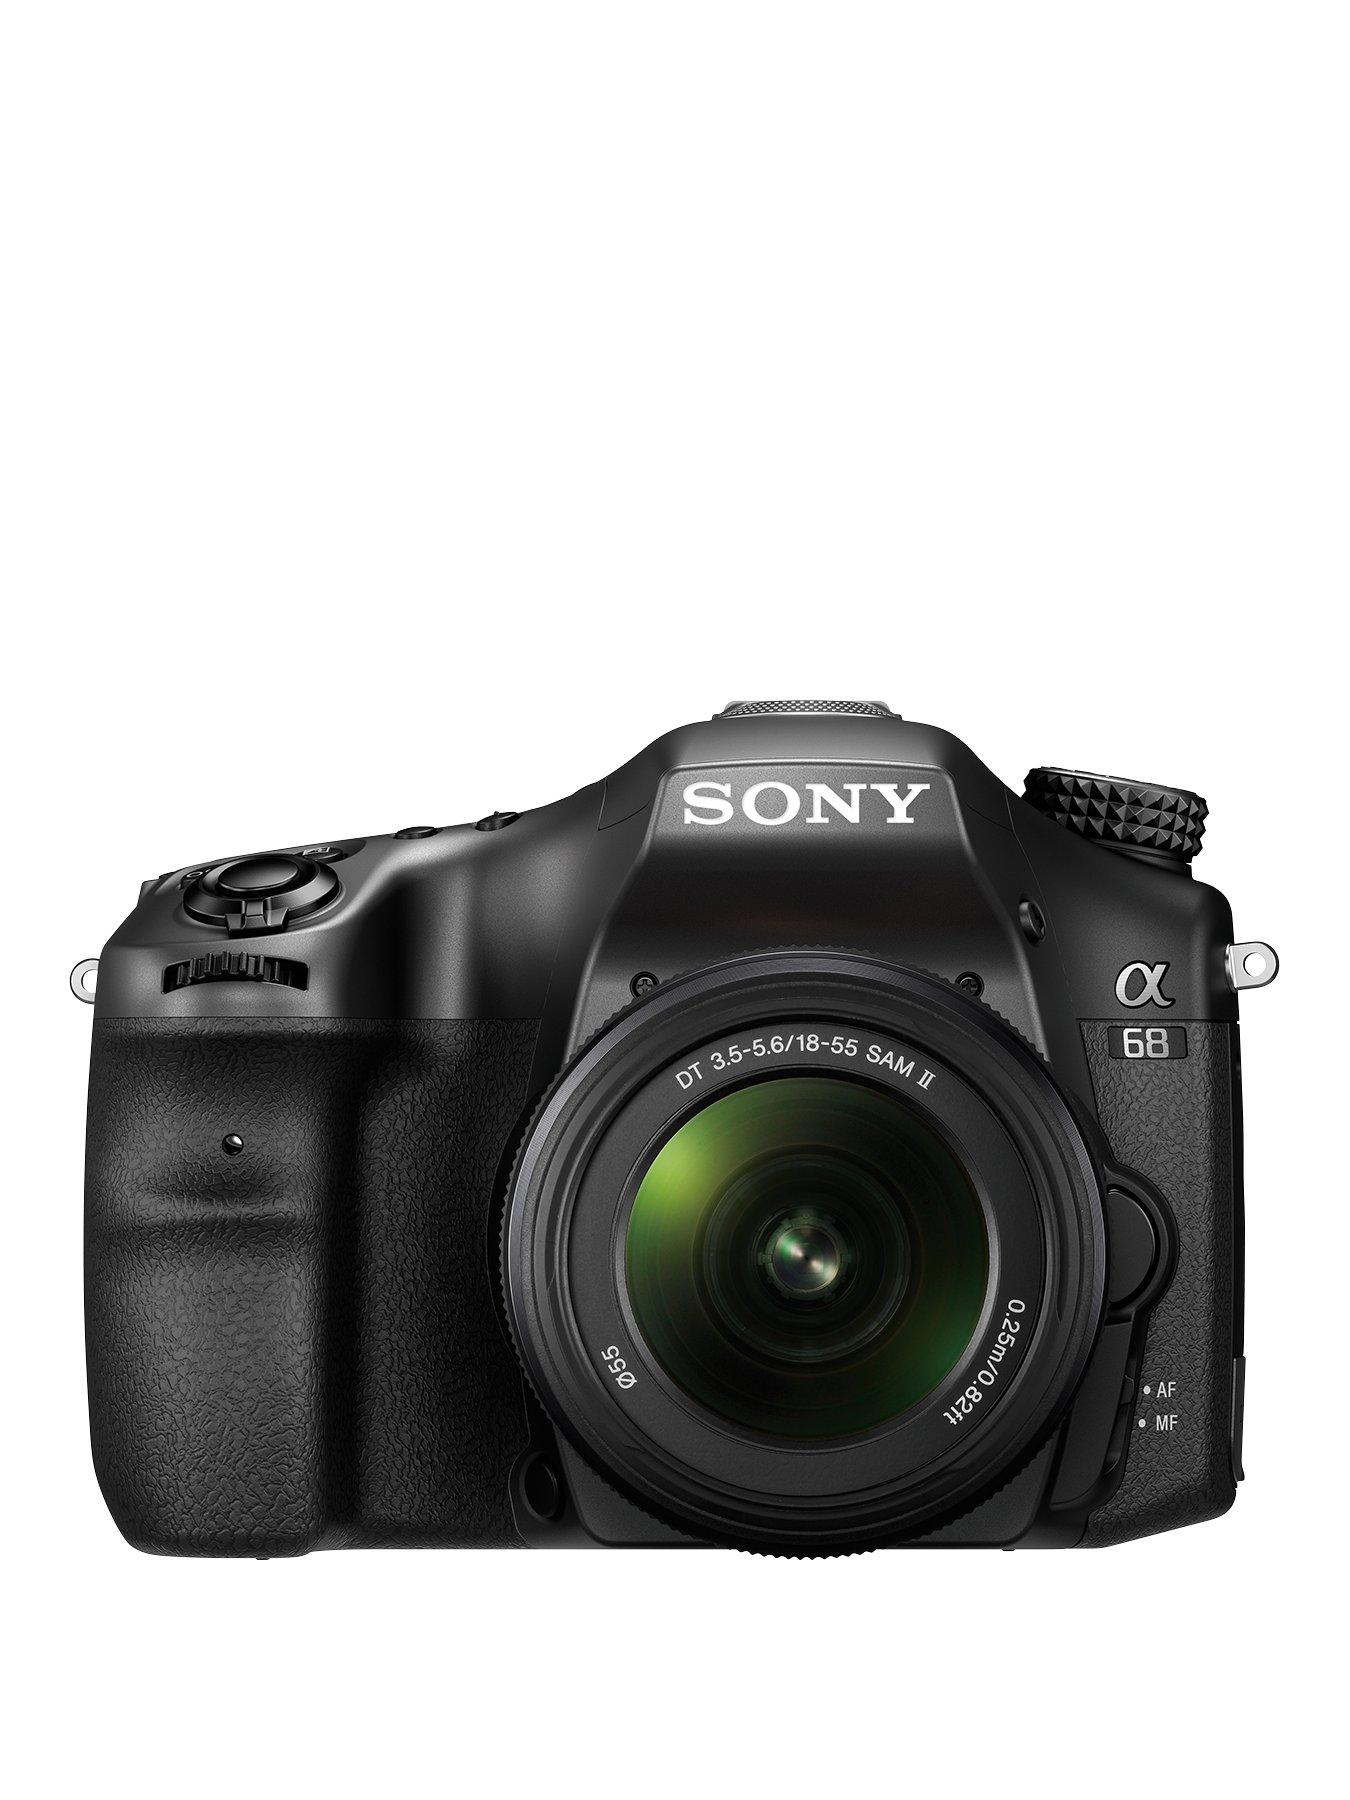 Sony A68 Digital Slr With 18-55Mm Lens